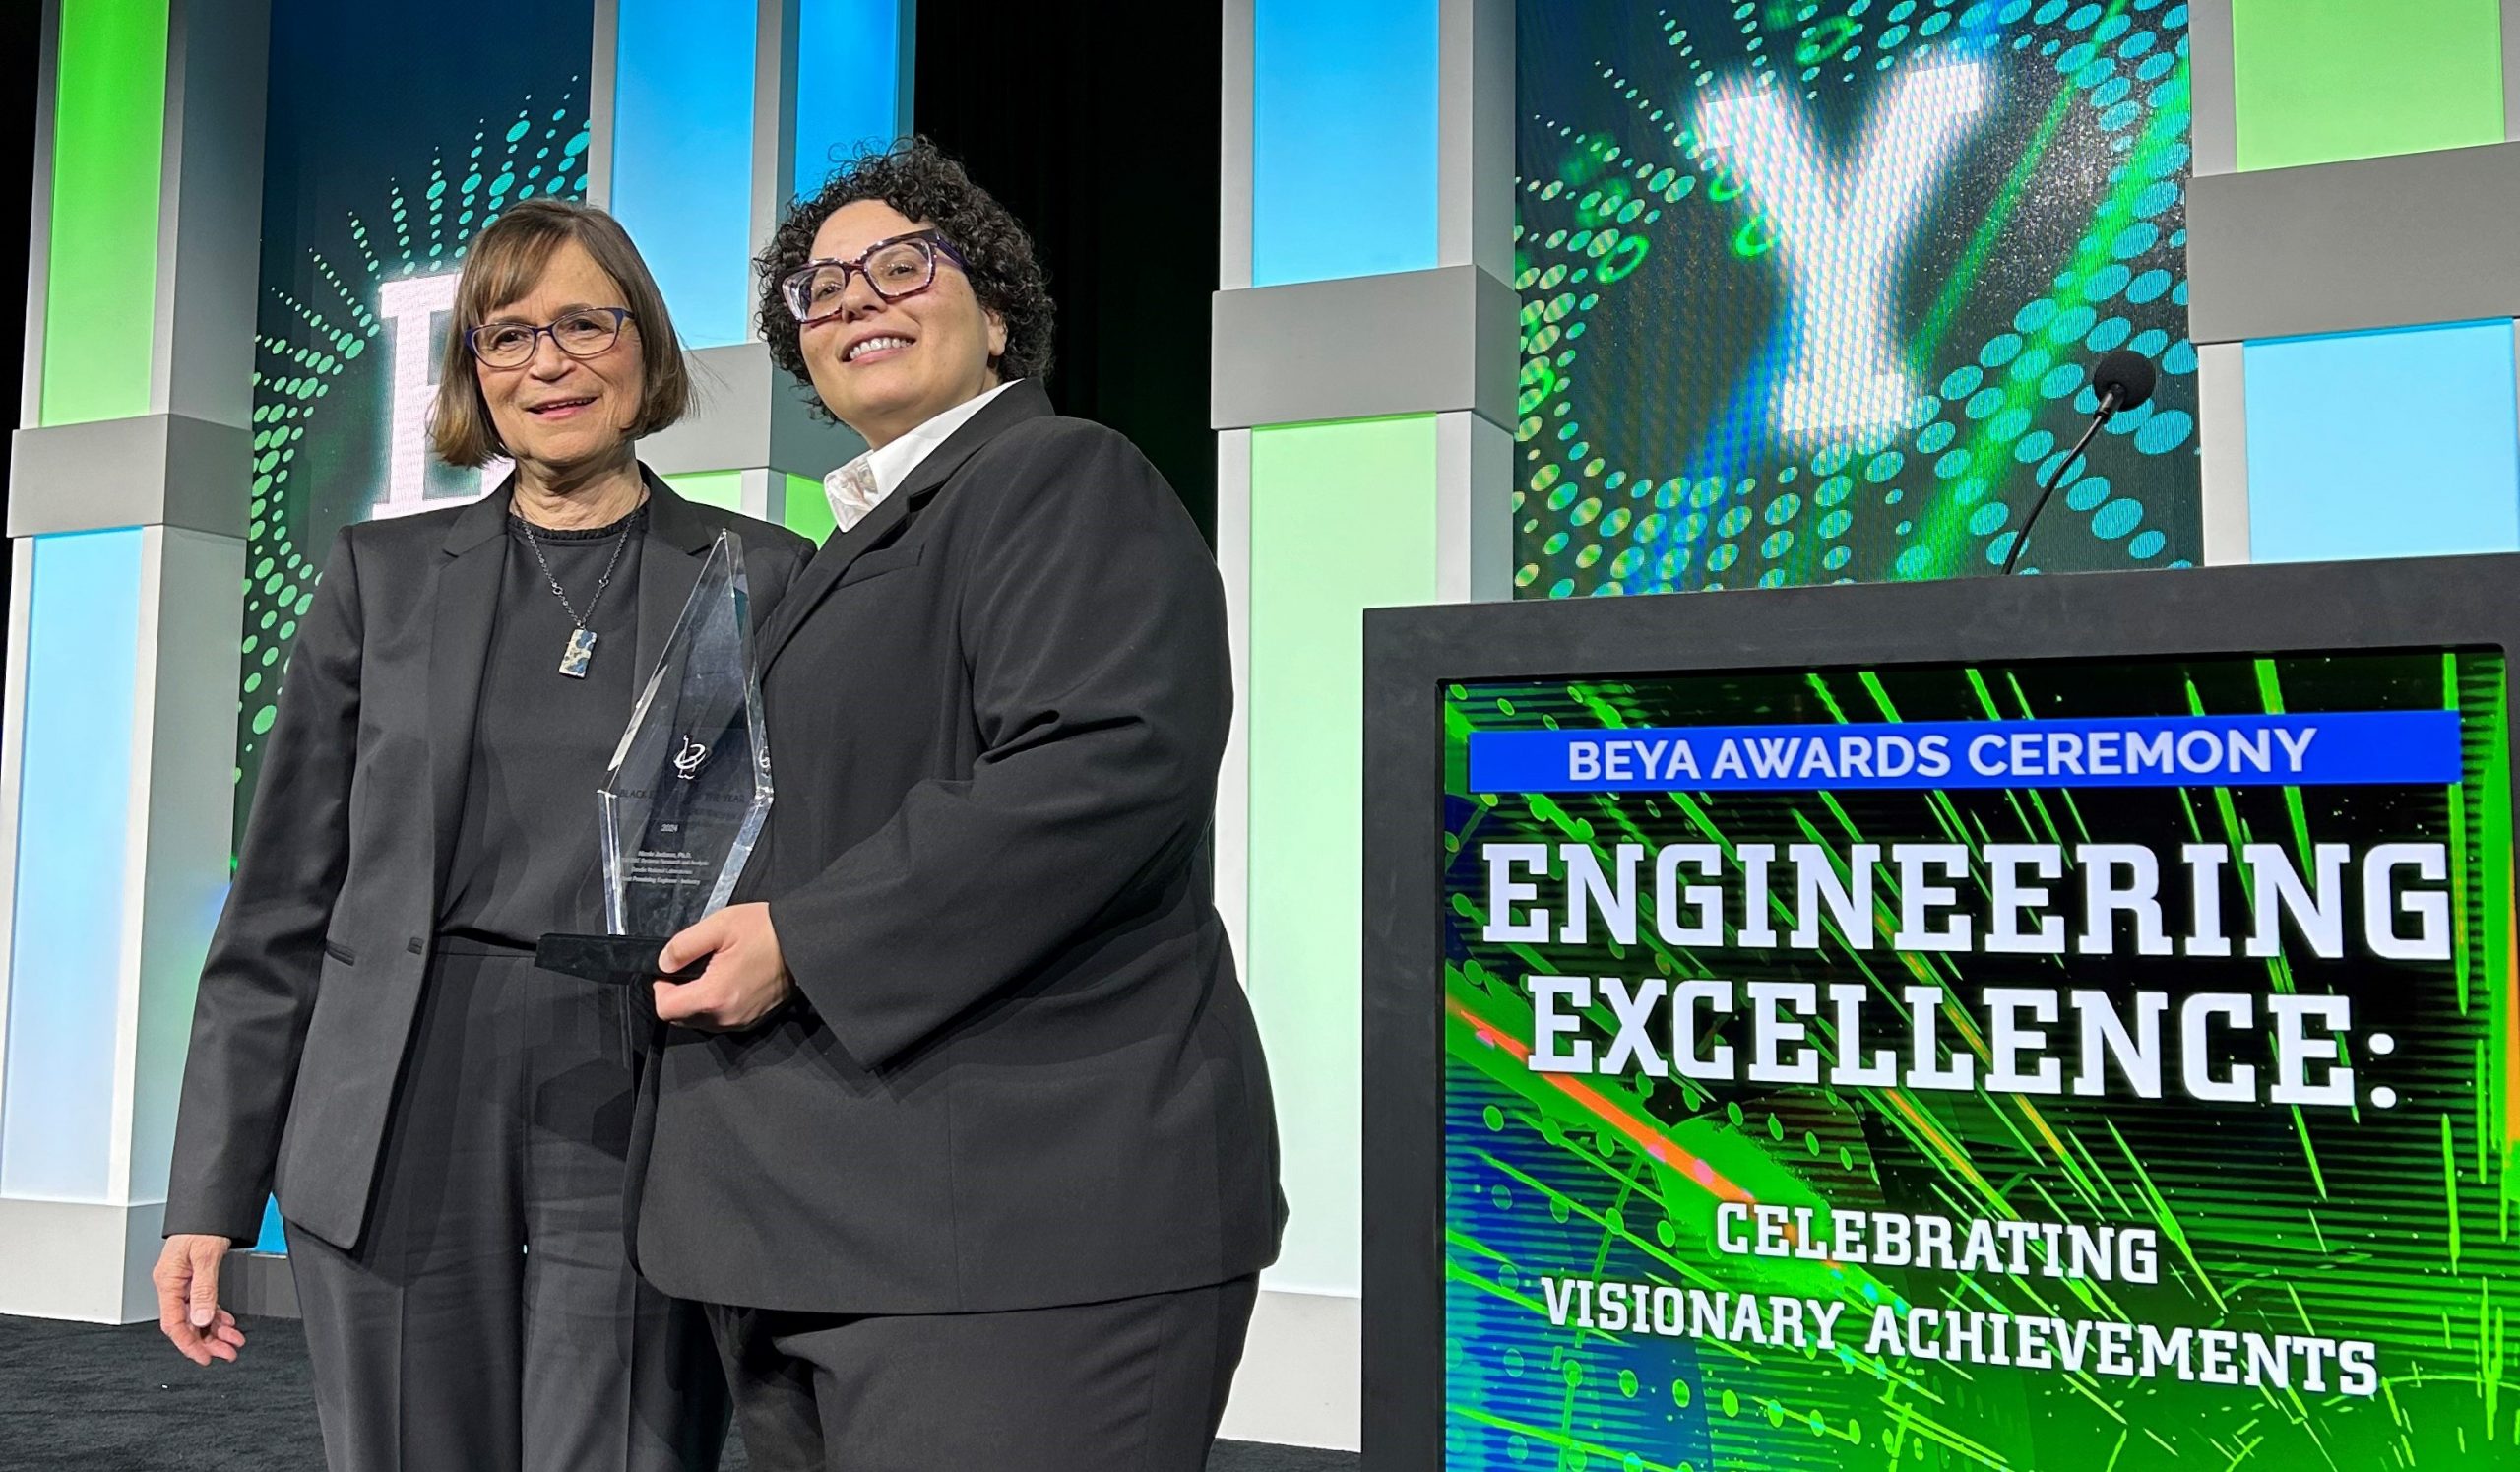 Stephanie Kuzio and Nicole Jackson pose with Nicole's award at the Black Engineer of the Year Award conference